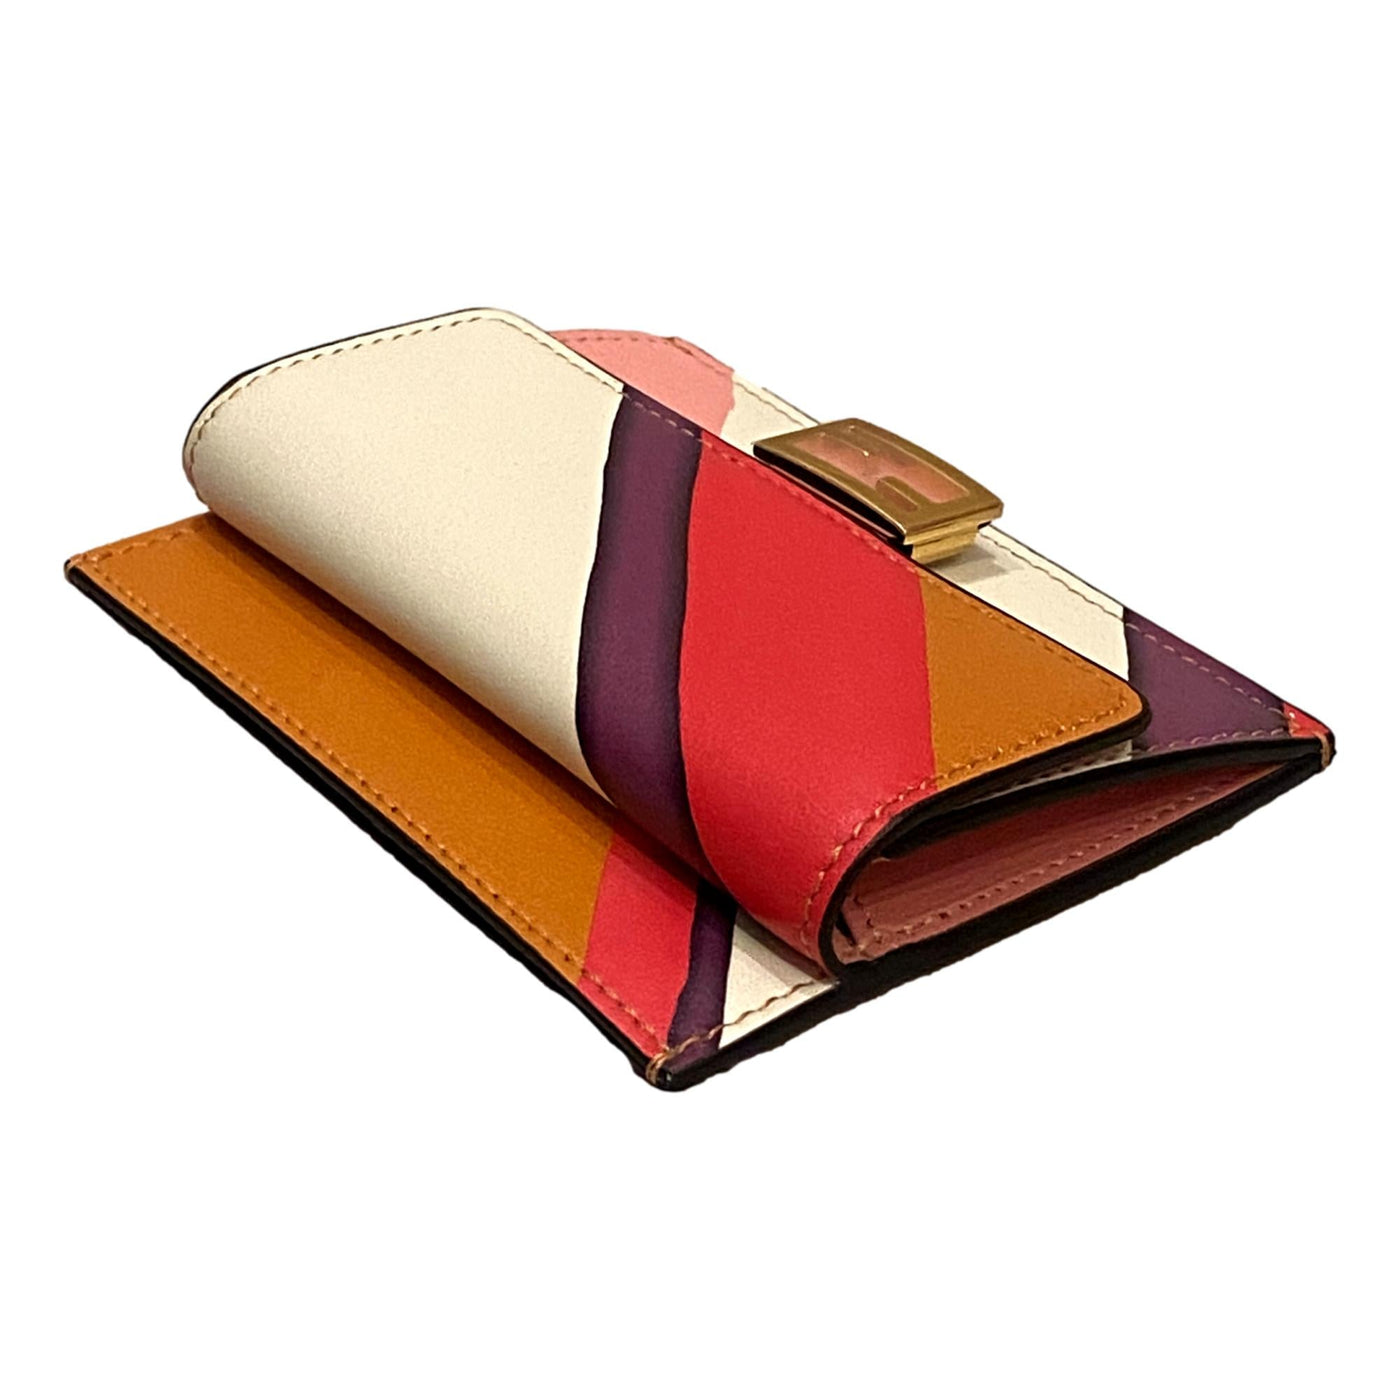 Fendi Baguette Hot Pink Stripe Leather Card Holder Wallet - LUXURYMRKT